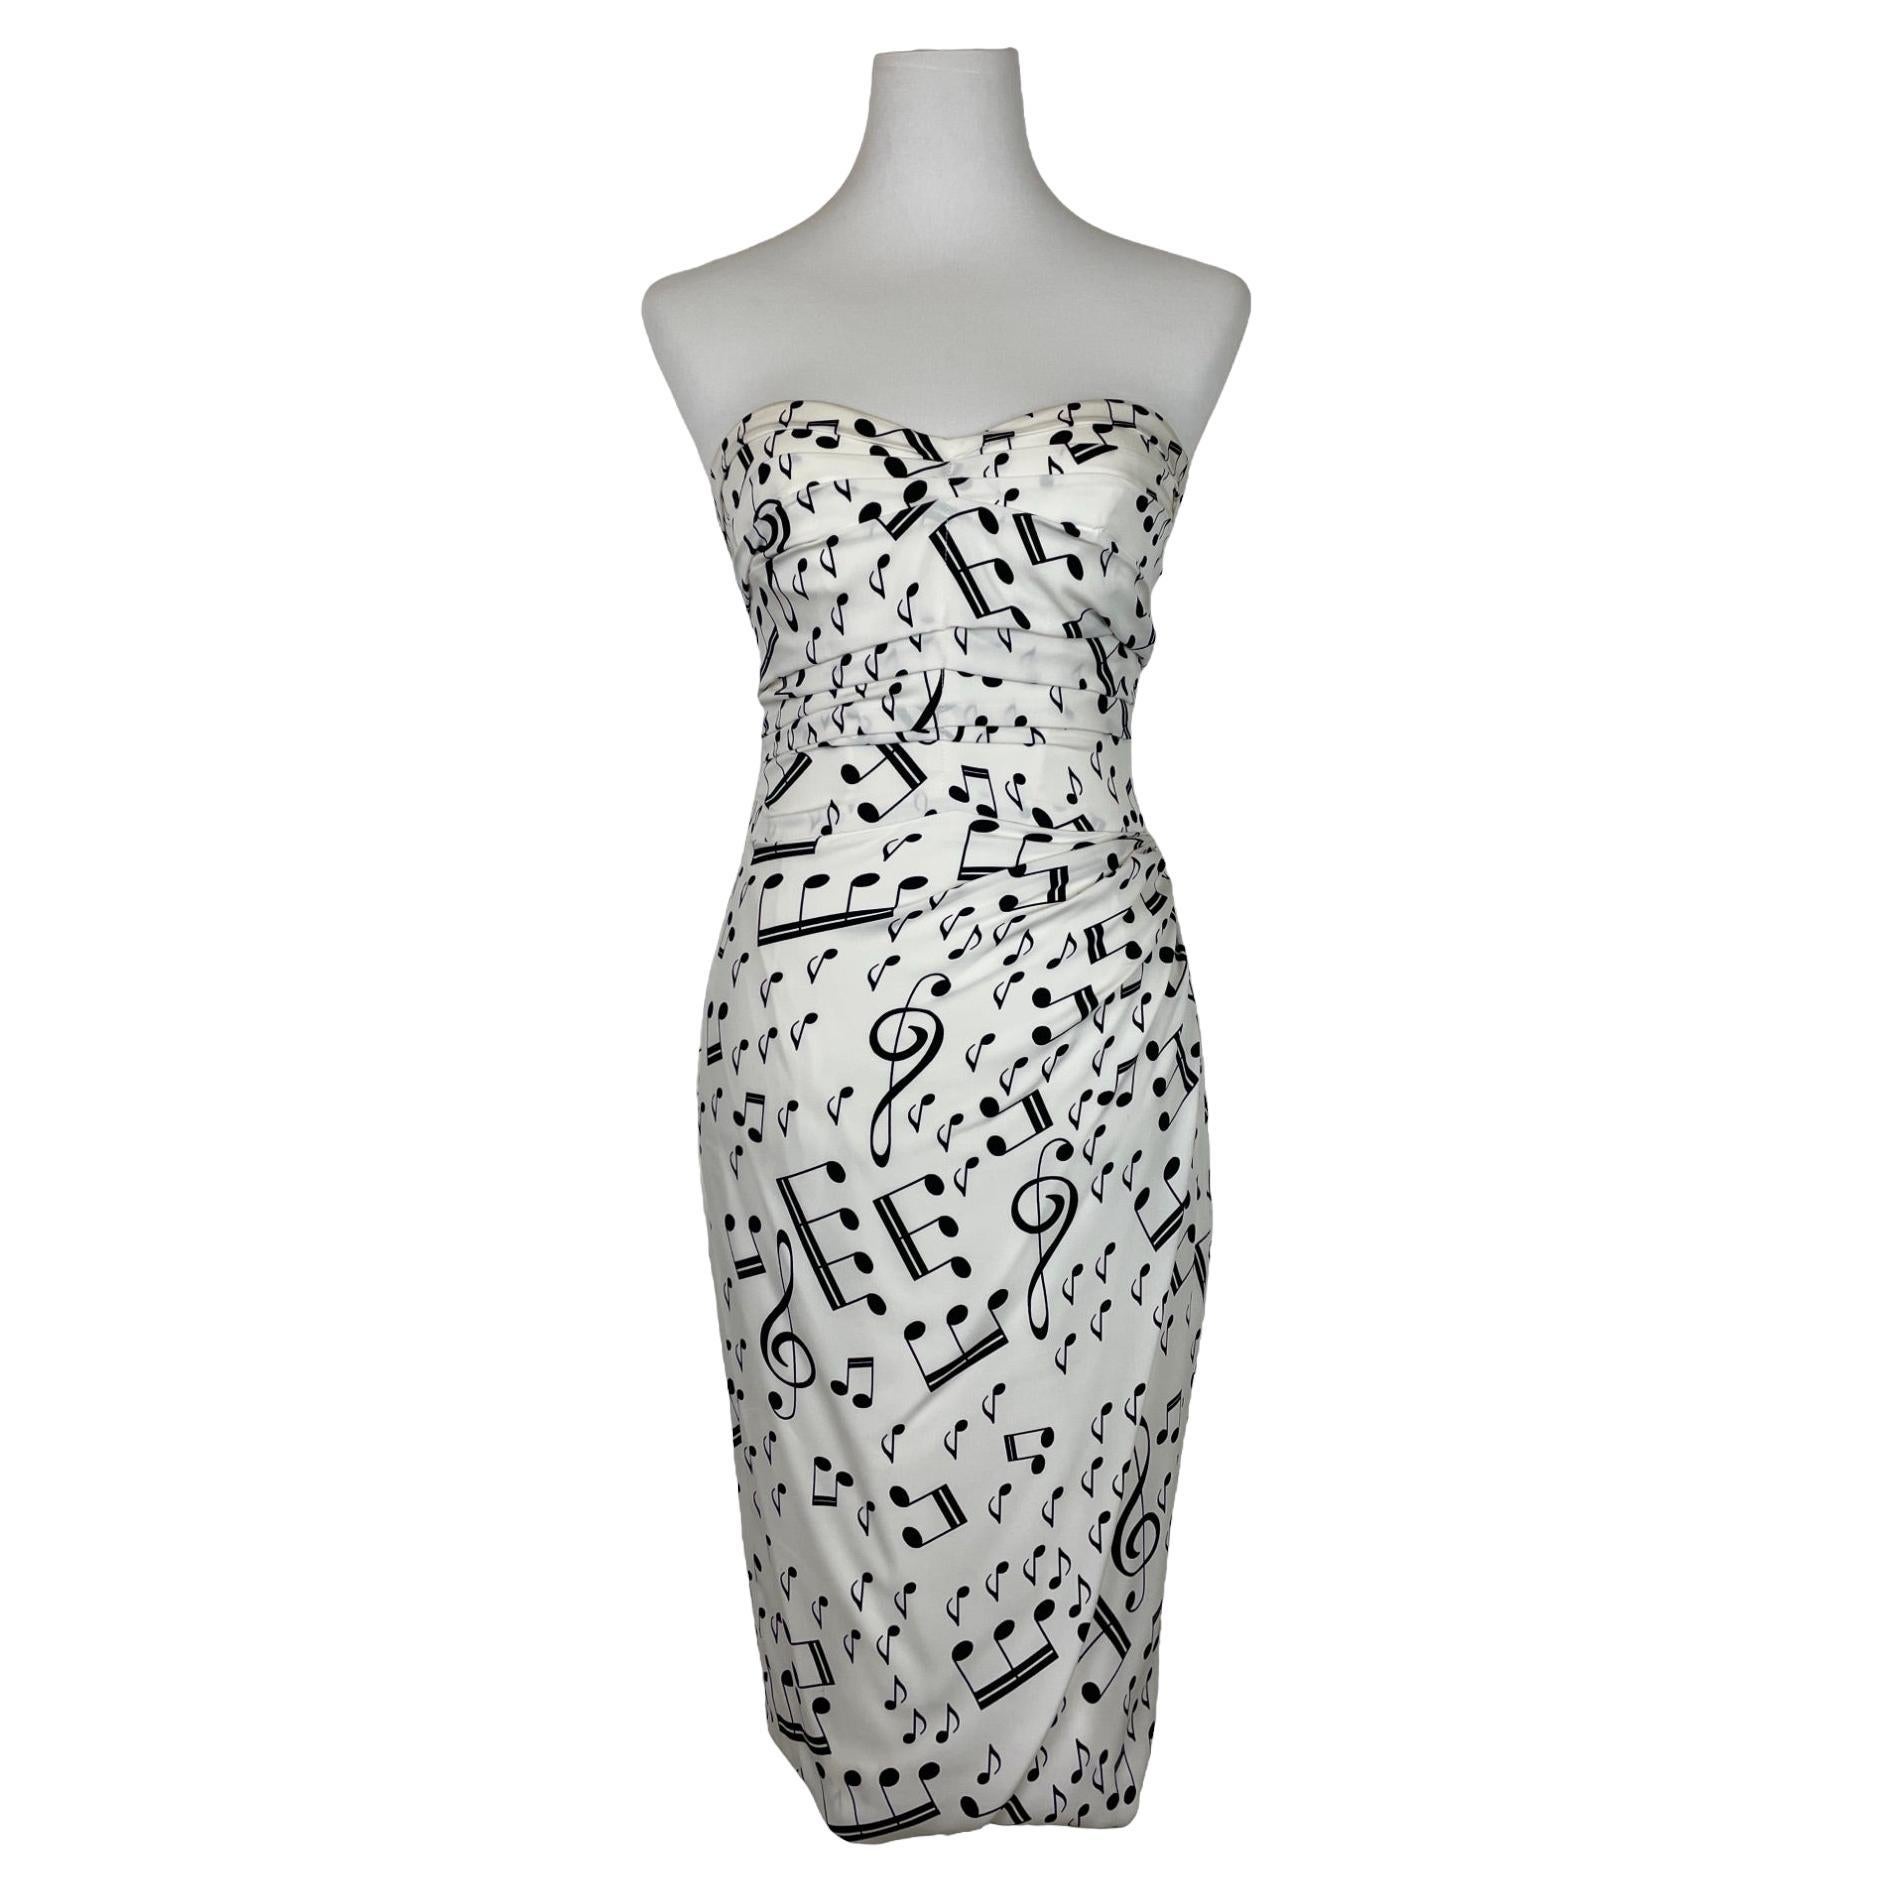 Iconic Dolce e Gabbana "Music" Dress F/W 2011 For Sale